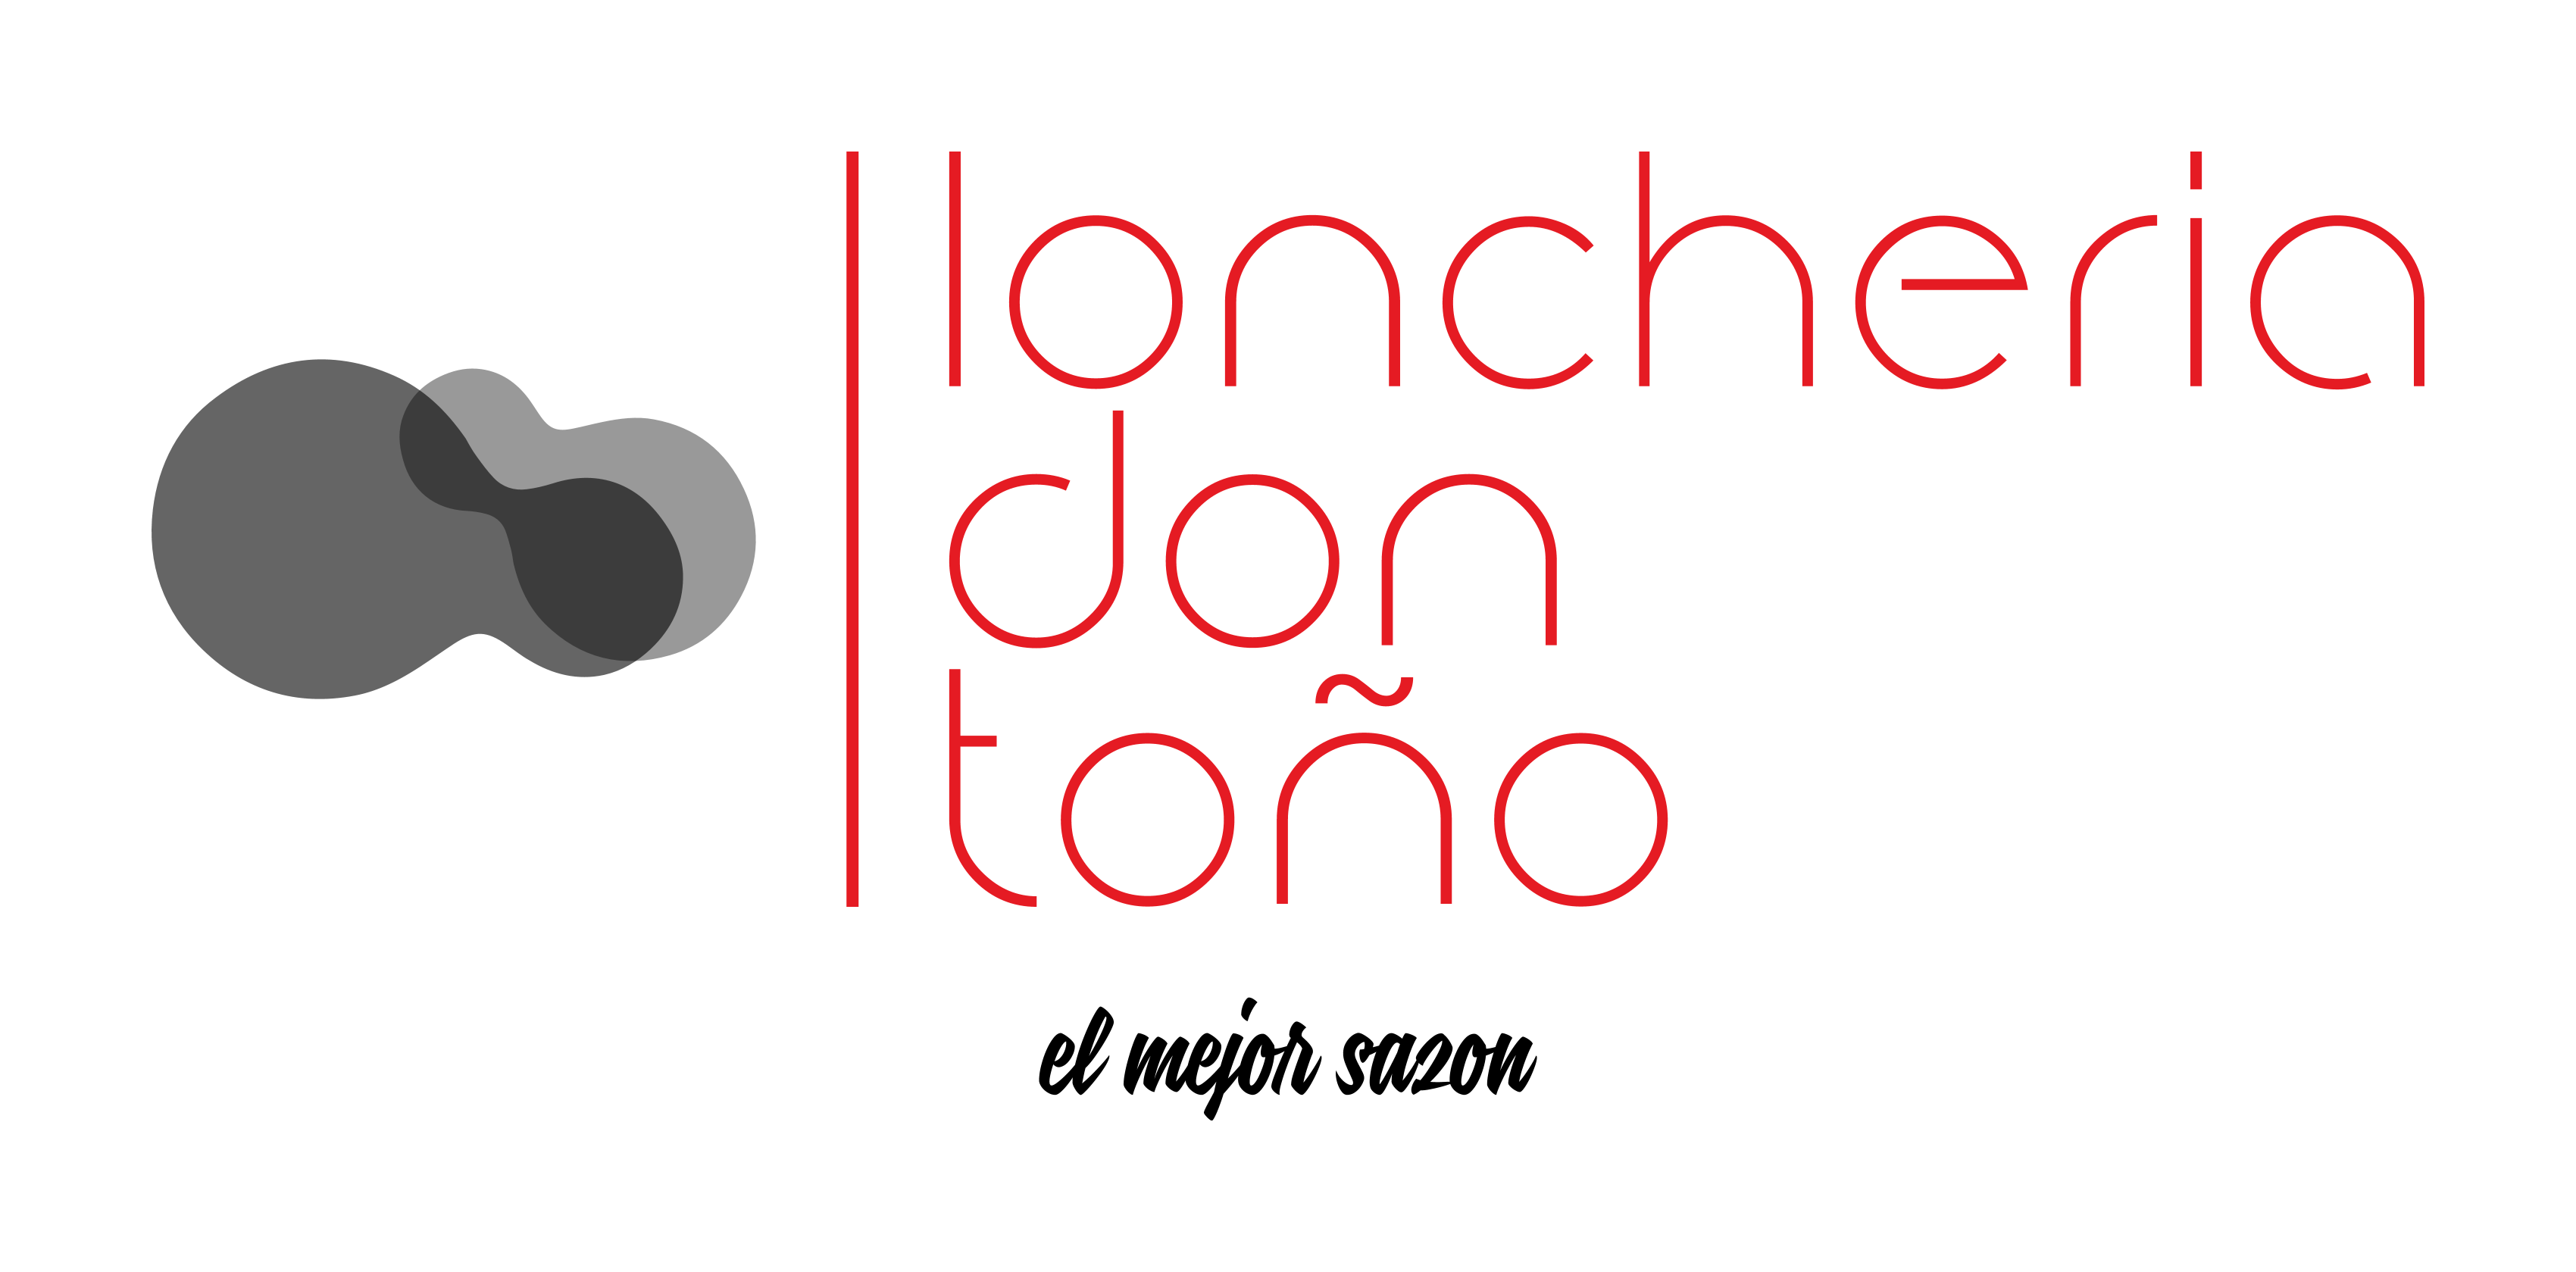 Loncheria Don Toño.. el mejor sazon